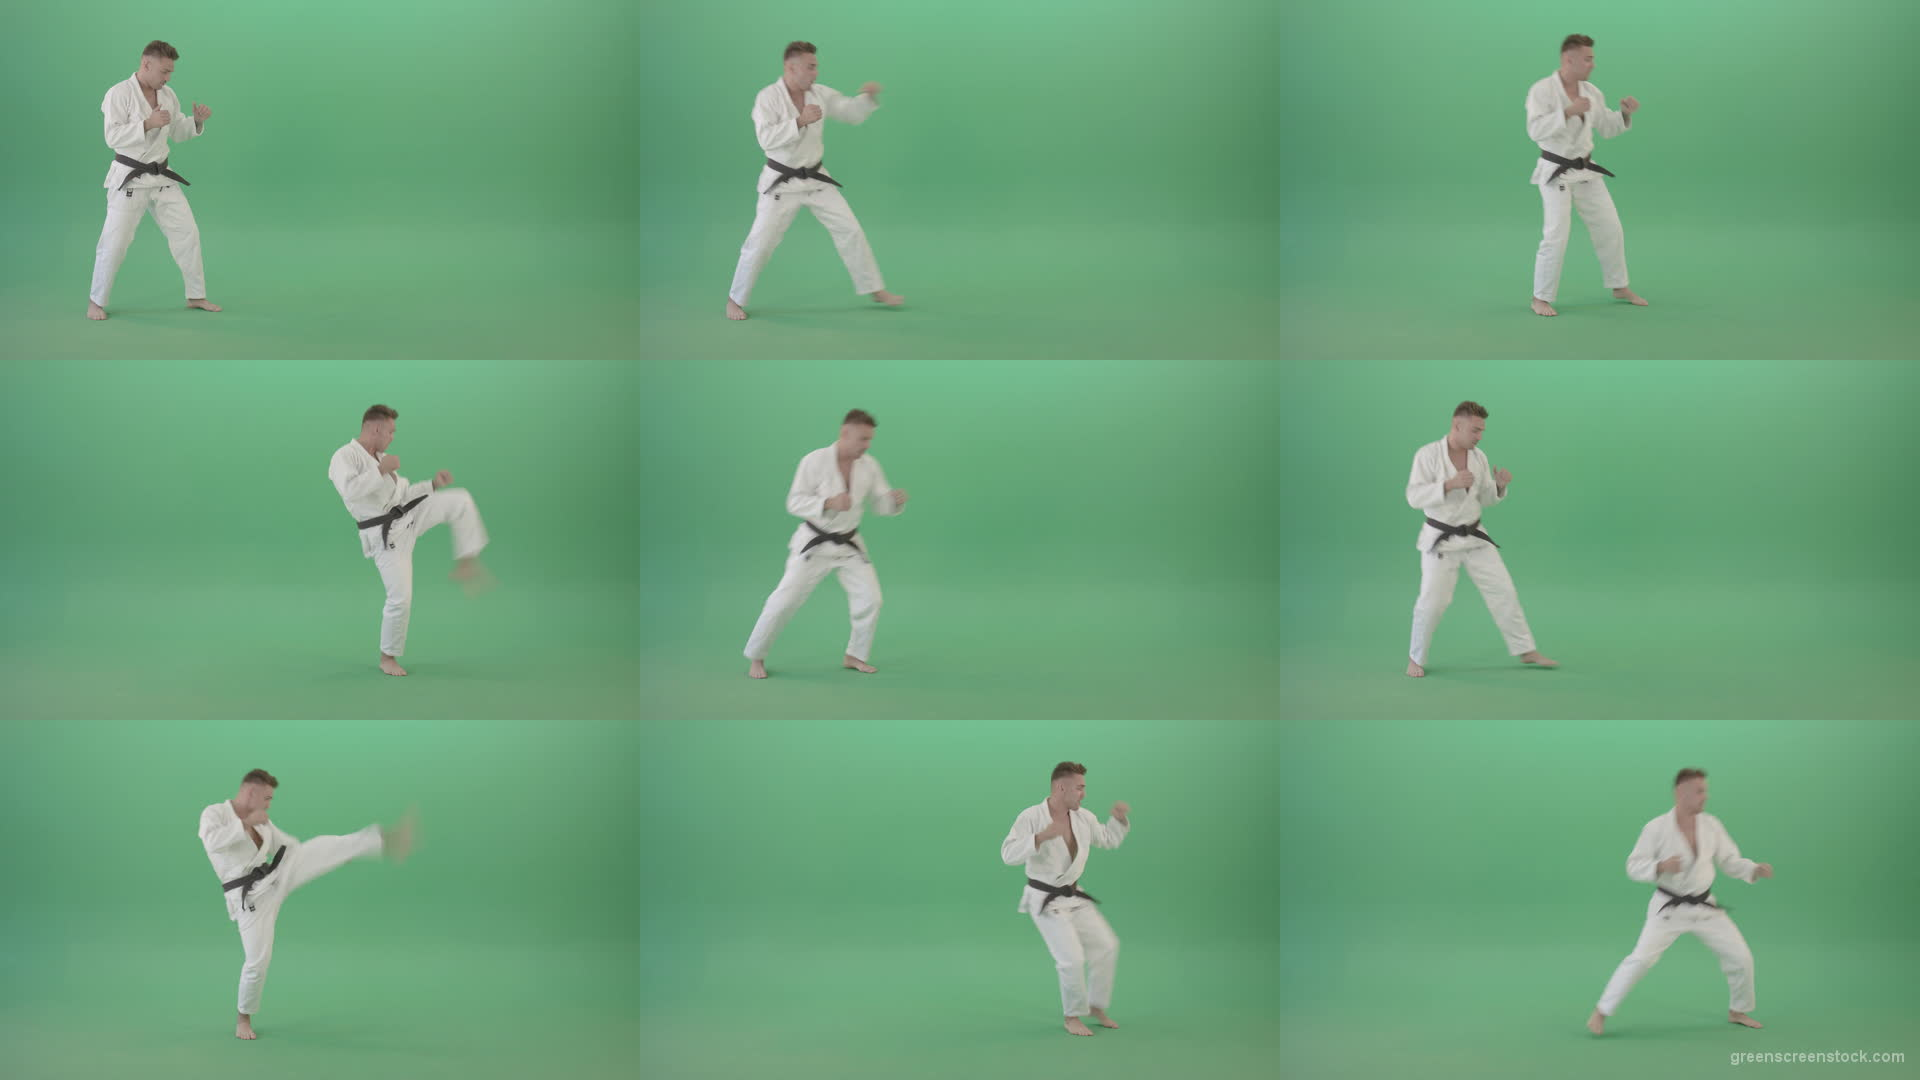 Jujutsu-Sportman-training-isolated-on-green-screen-4K-Video-Footage-1920 Green Screen Stock